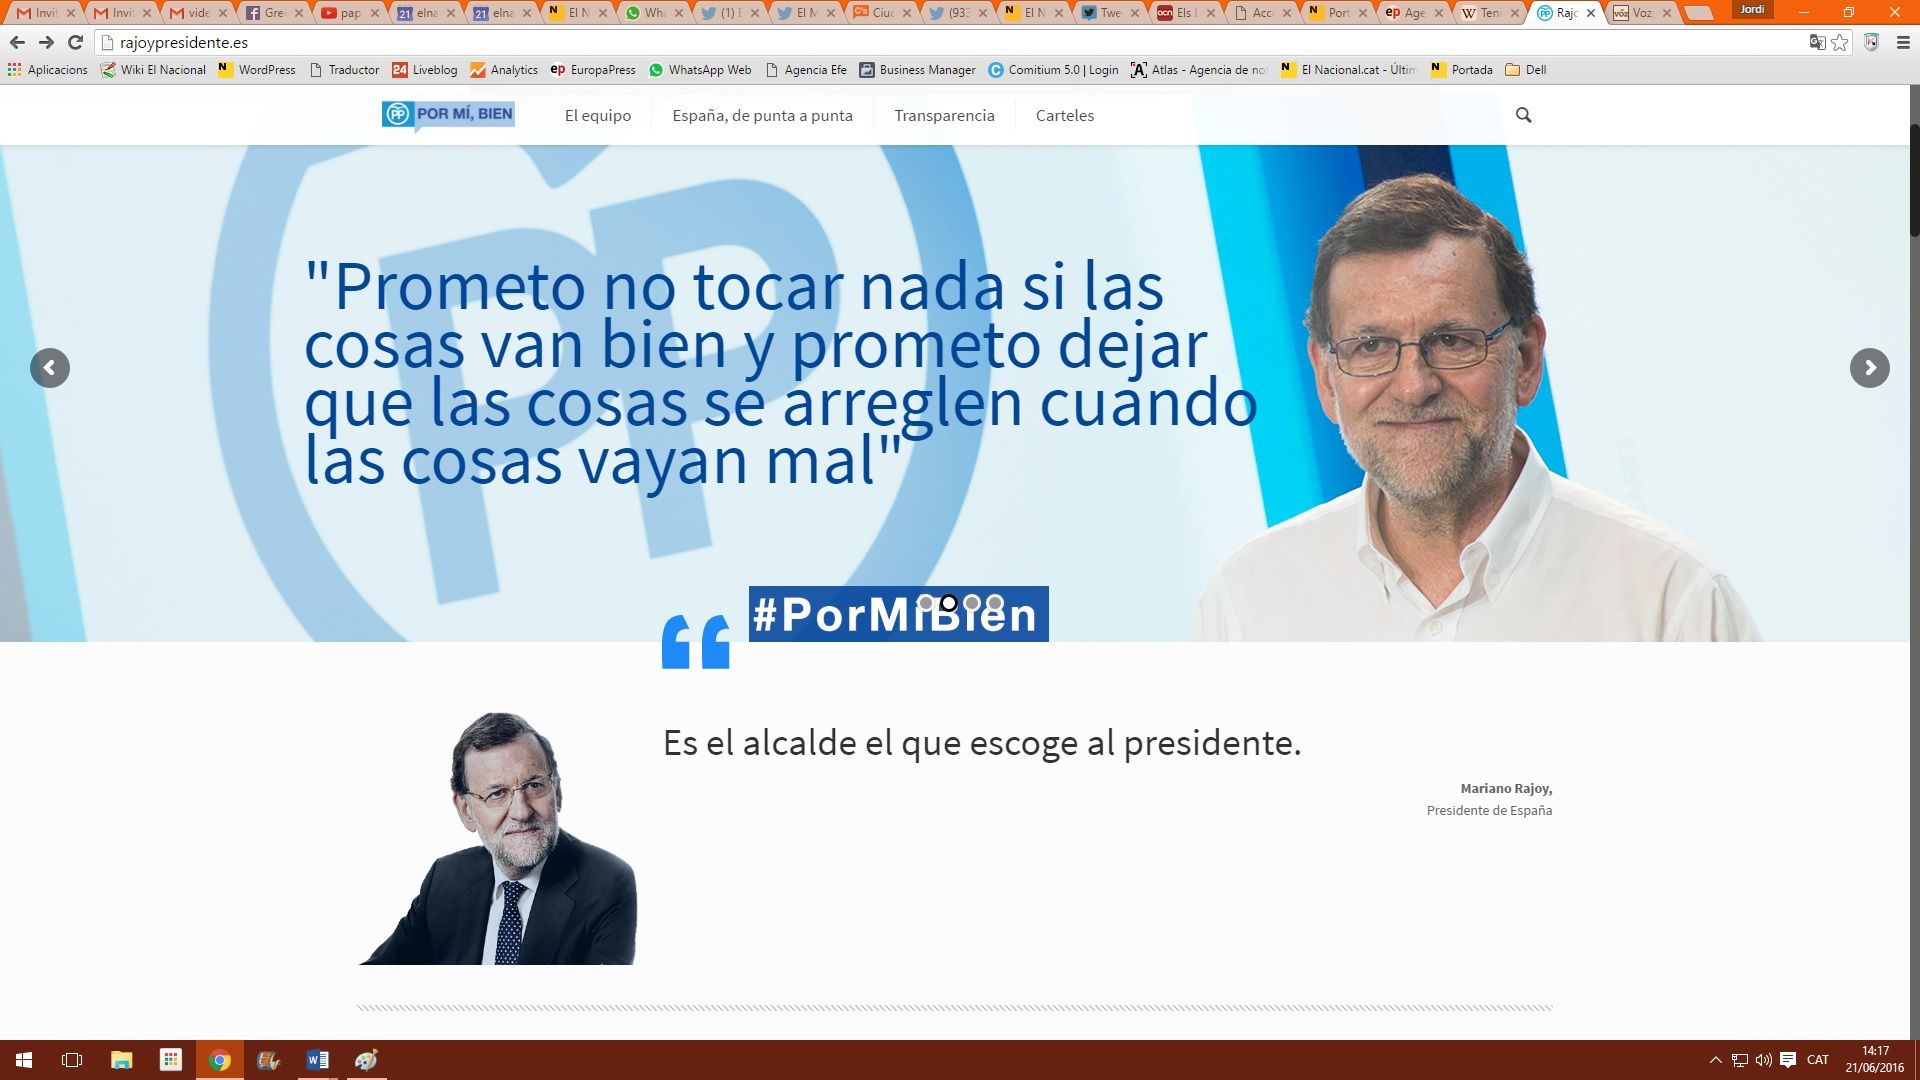 El Mundo Today tanca la web rajoypresidente.es davant les pressions del PP